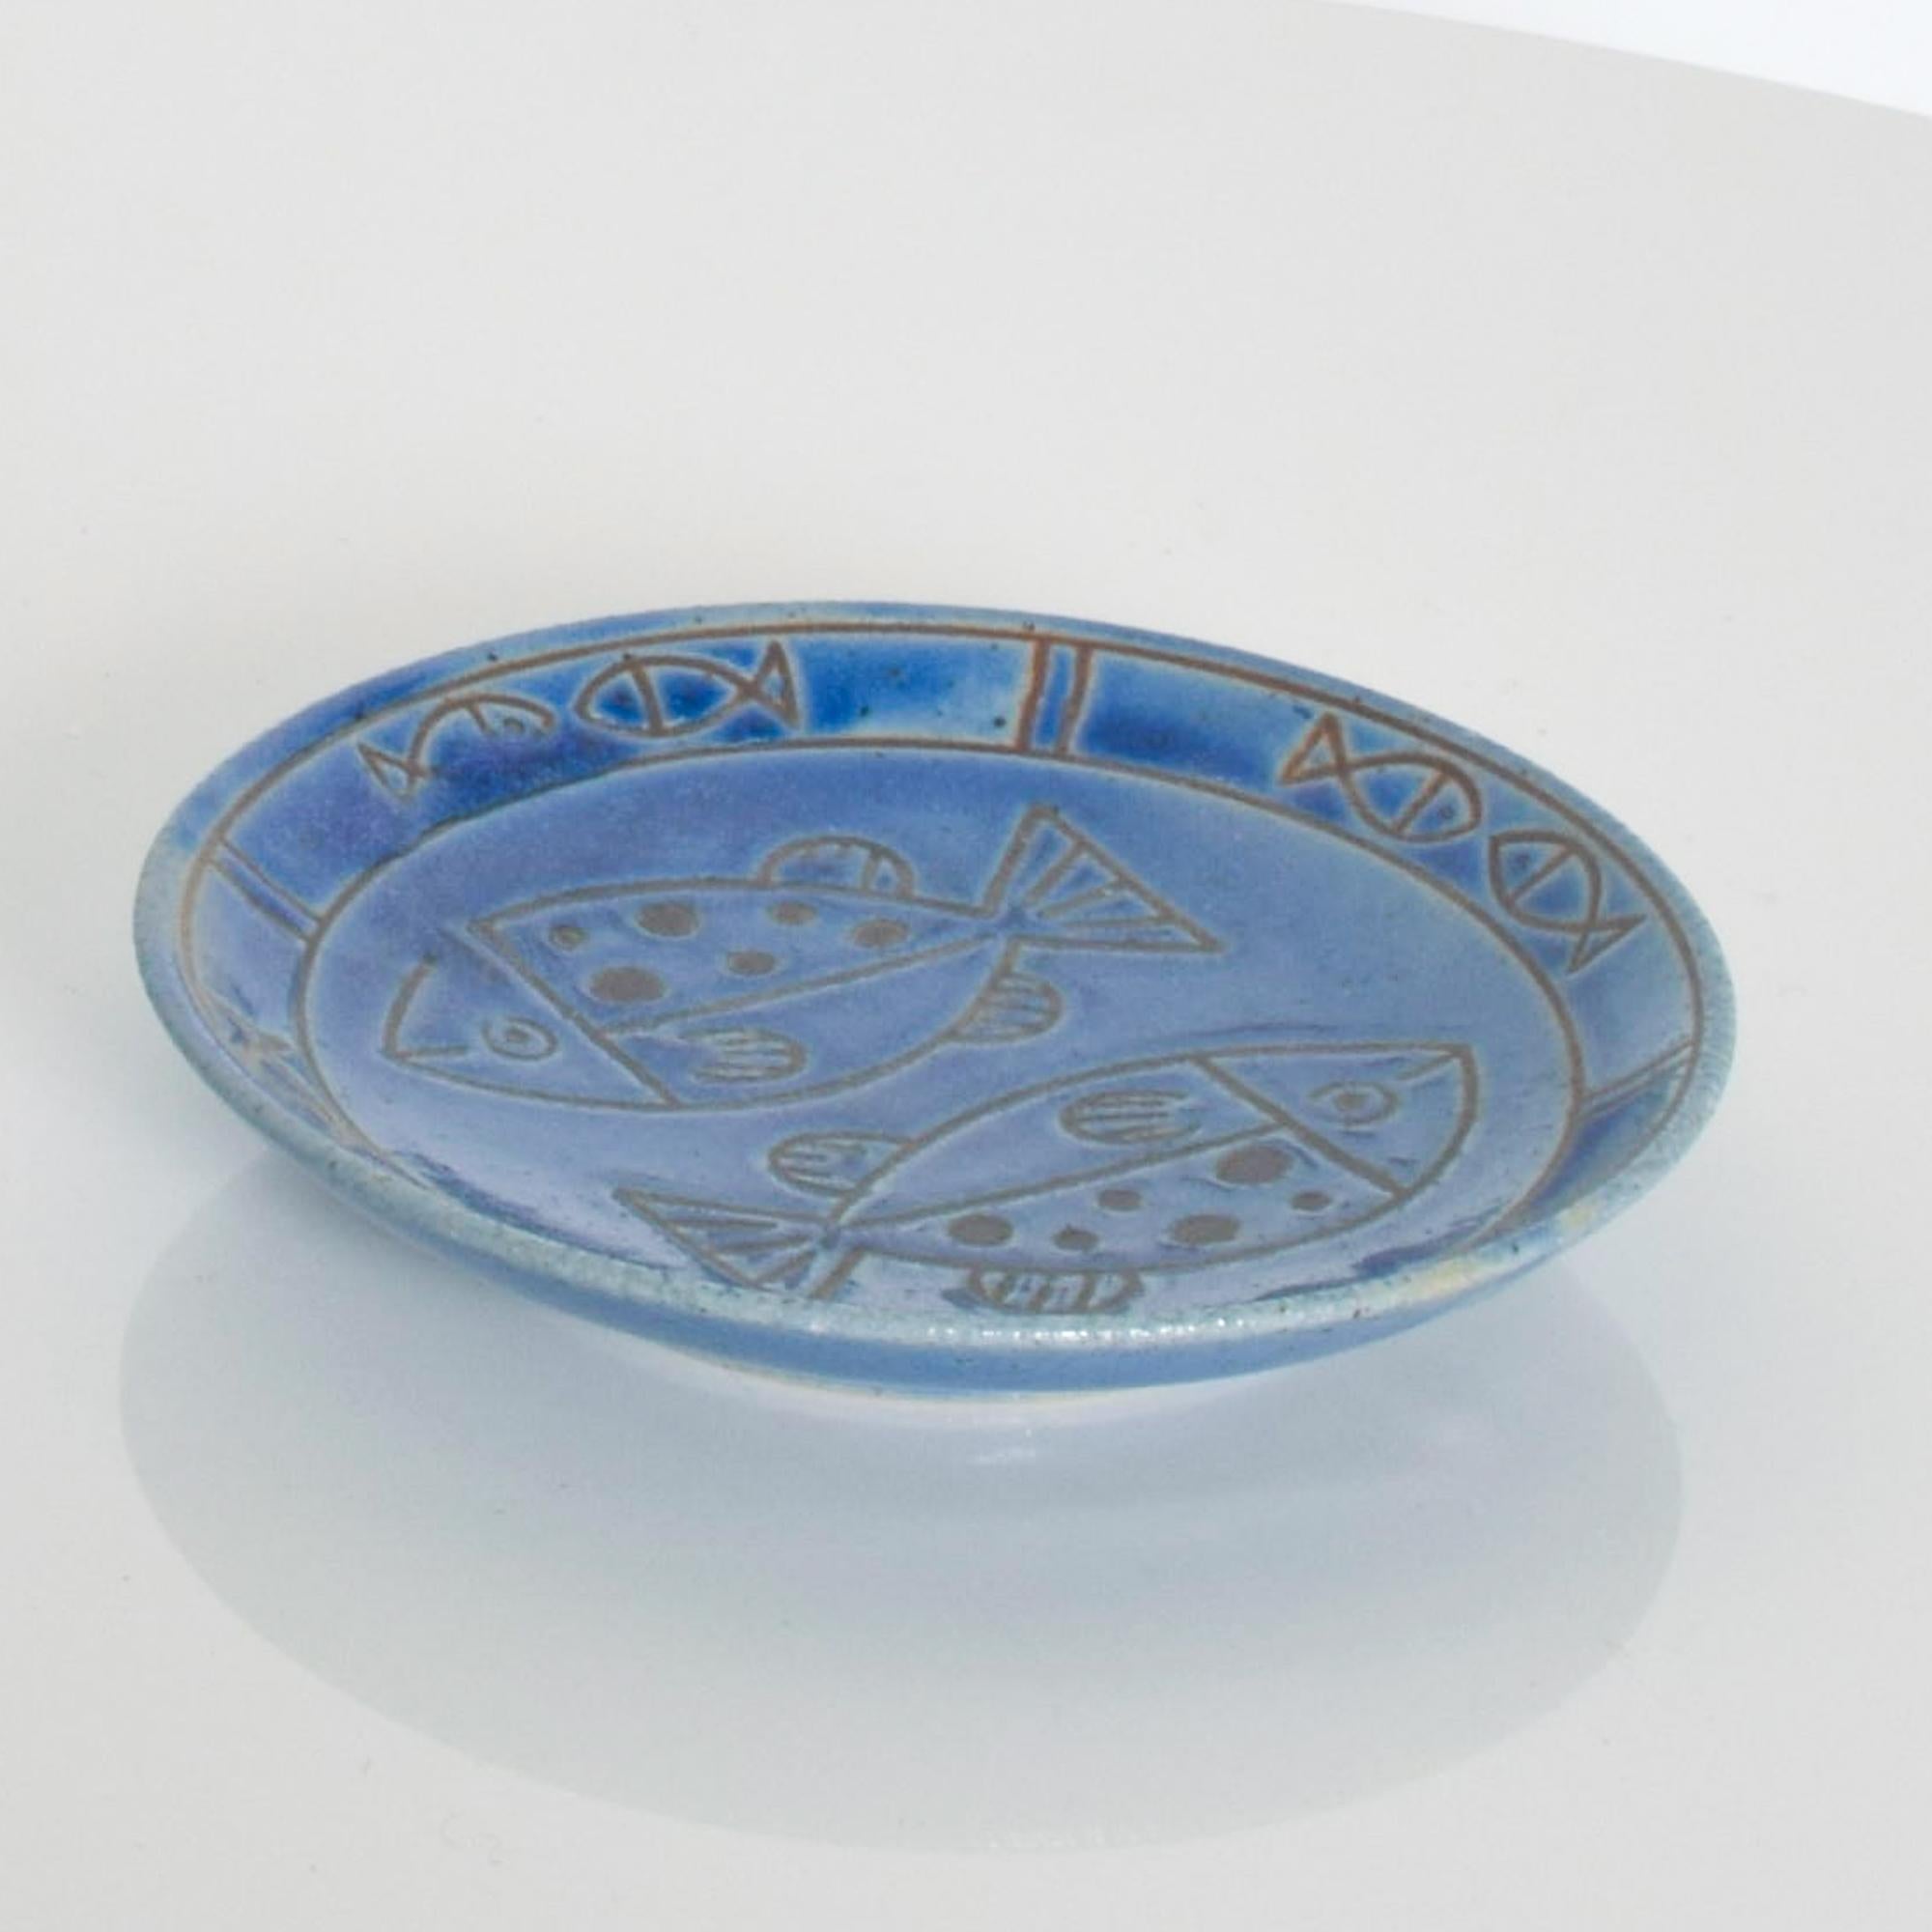 Vintage religious art Christian faith fish symbol Pisces decorative dish display etched ceramic plate in cobalt blue
Mesures : 5,25